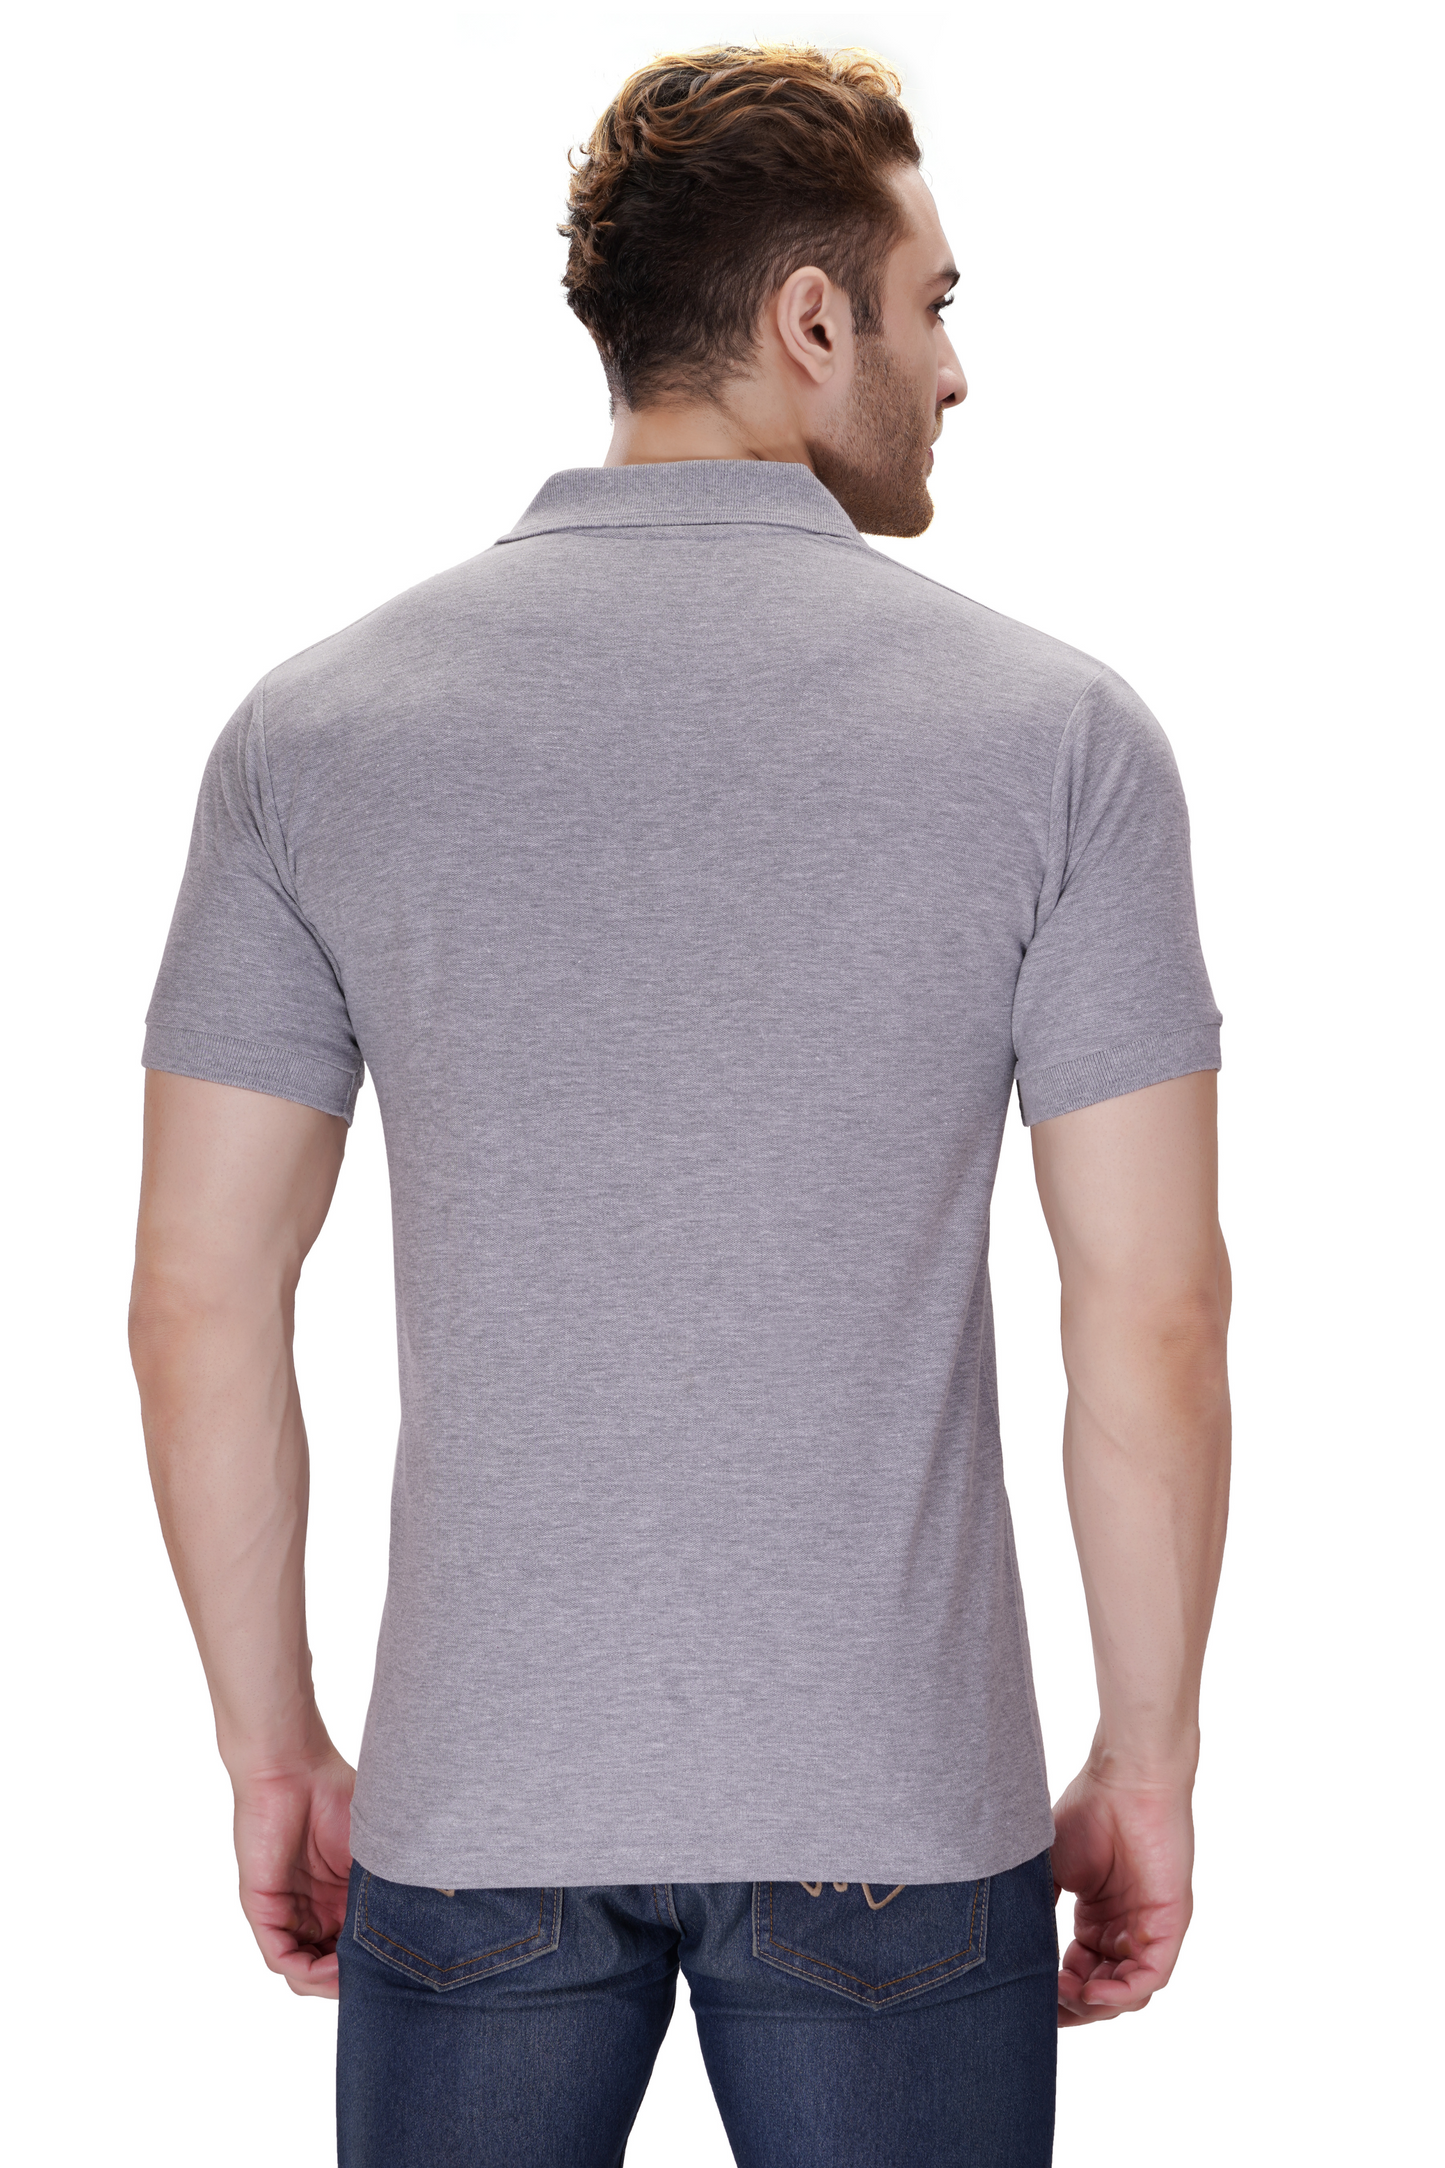 100% Cotton Men’s Half Sleeve Polo Neck T-Shirt - Grey Melange